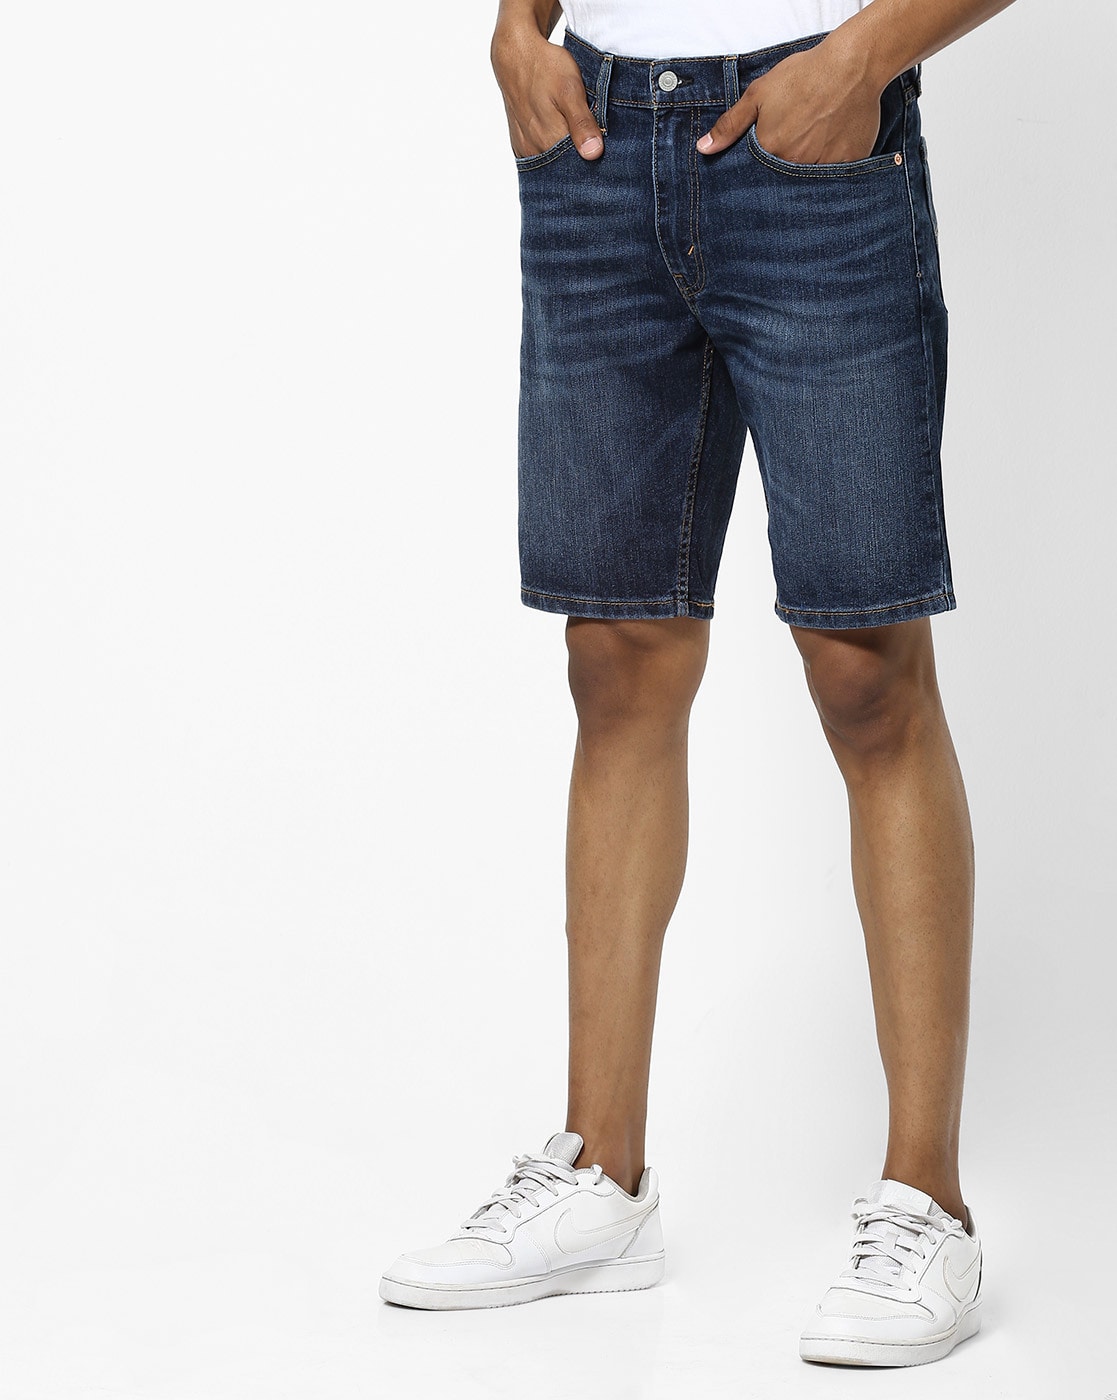 levi jeans shorts for men